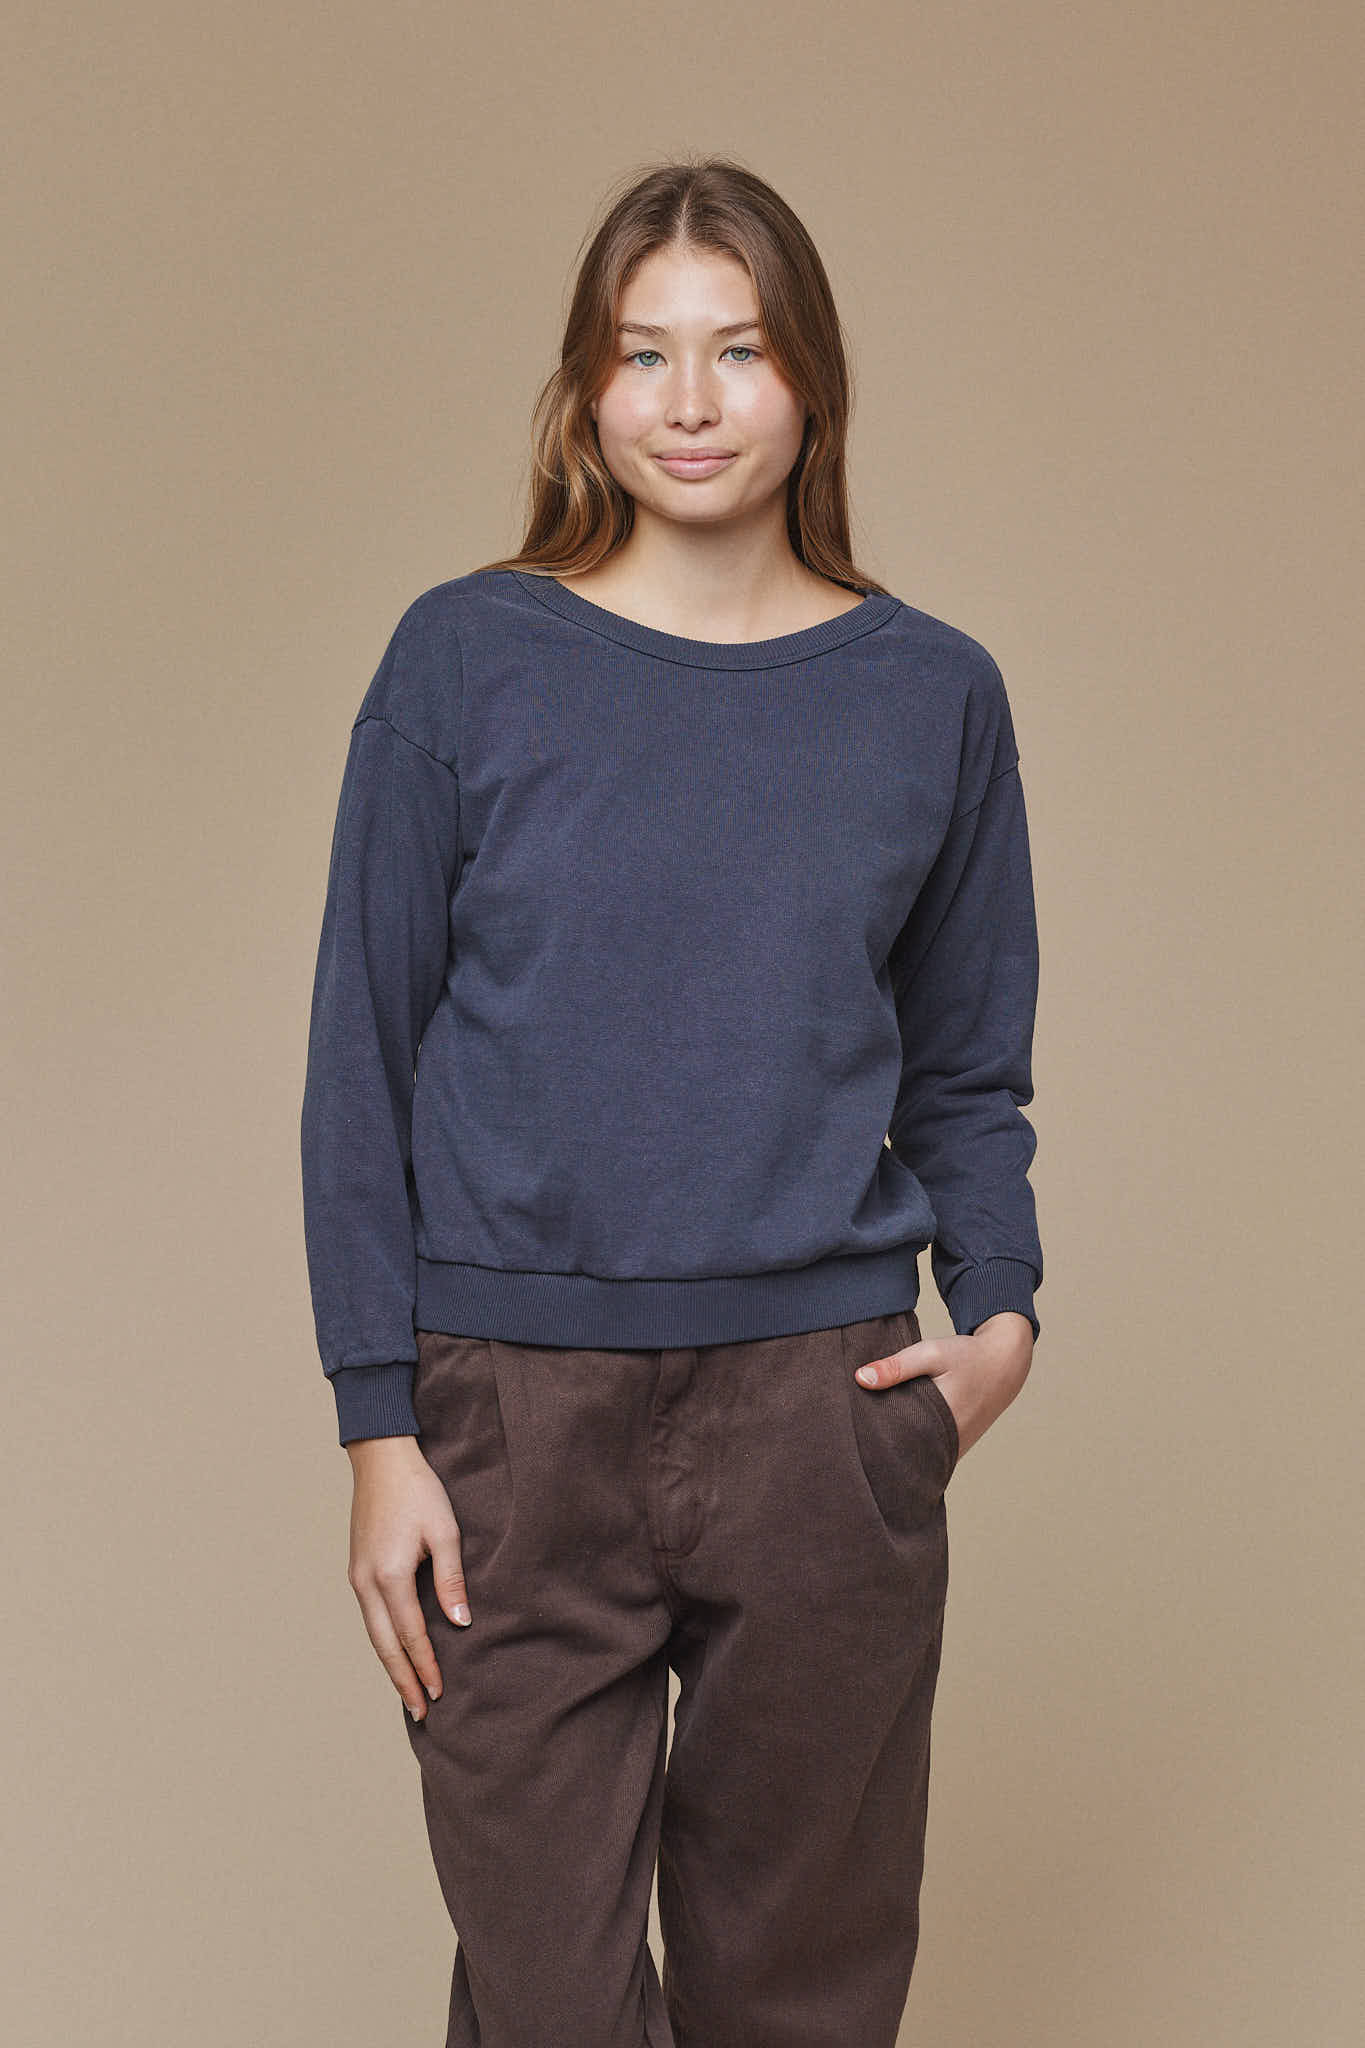 Laguna Cropped Sweatshirt | Jungmaven Hemp Clothing & Accessories / model_desc: Katriel is 5’9” wearing S